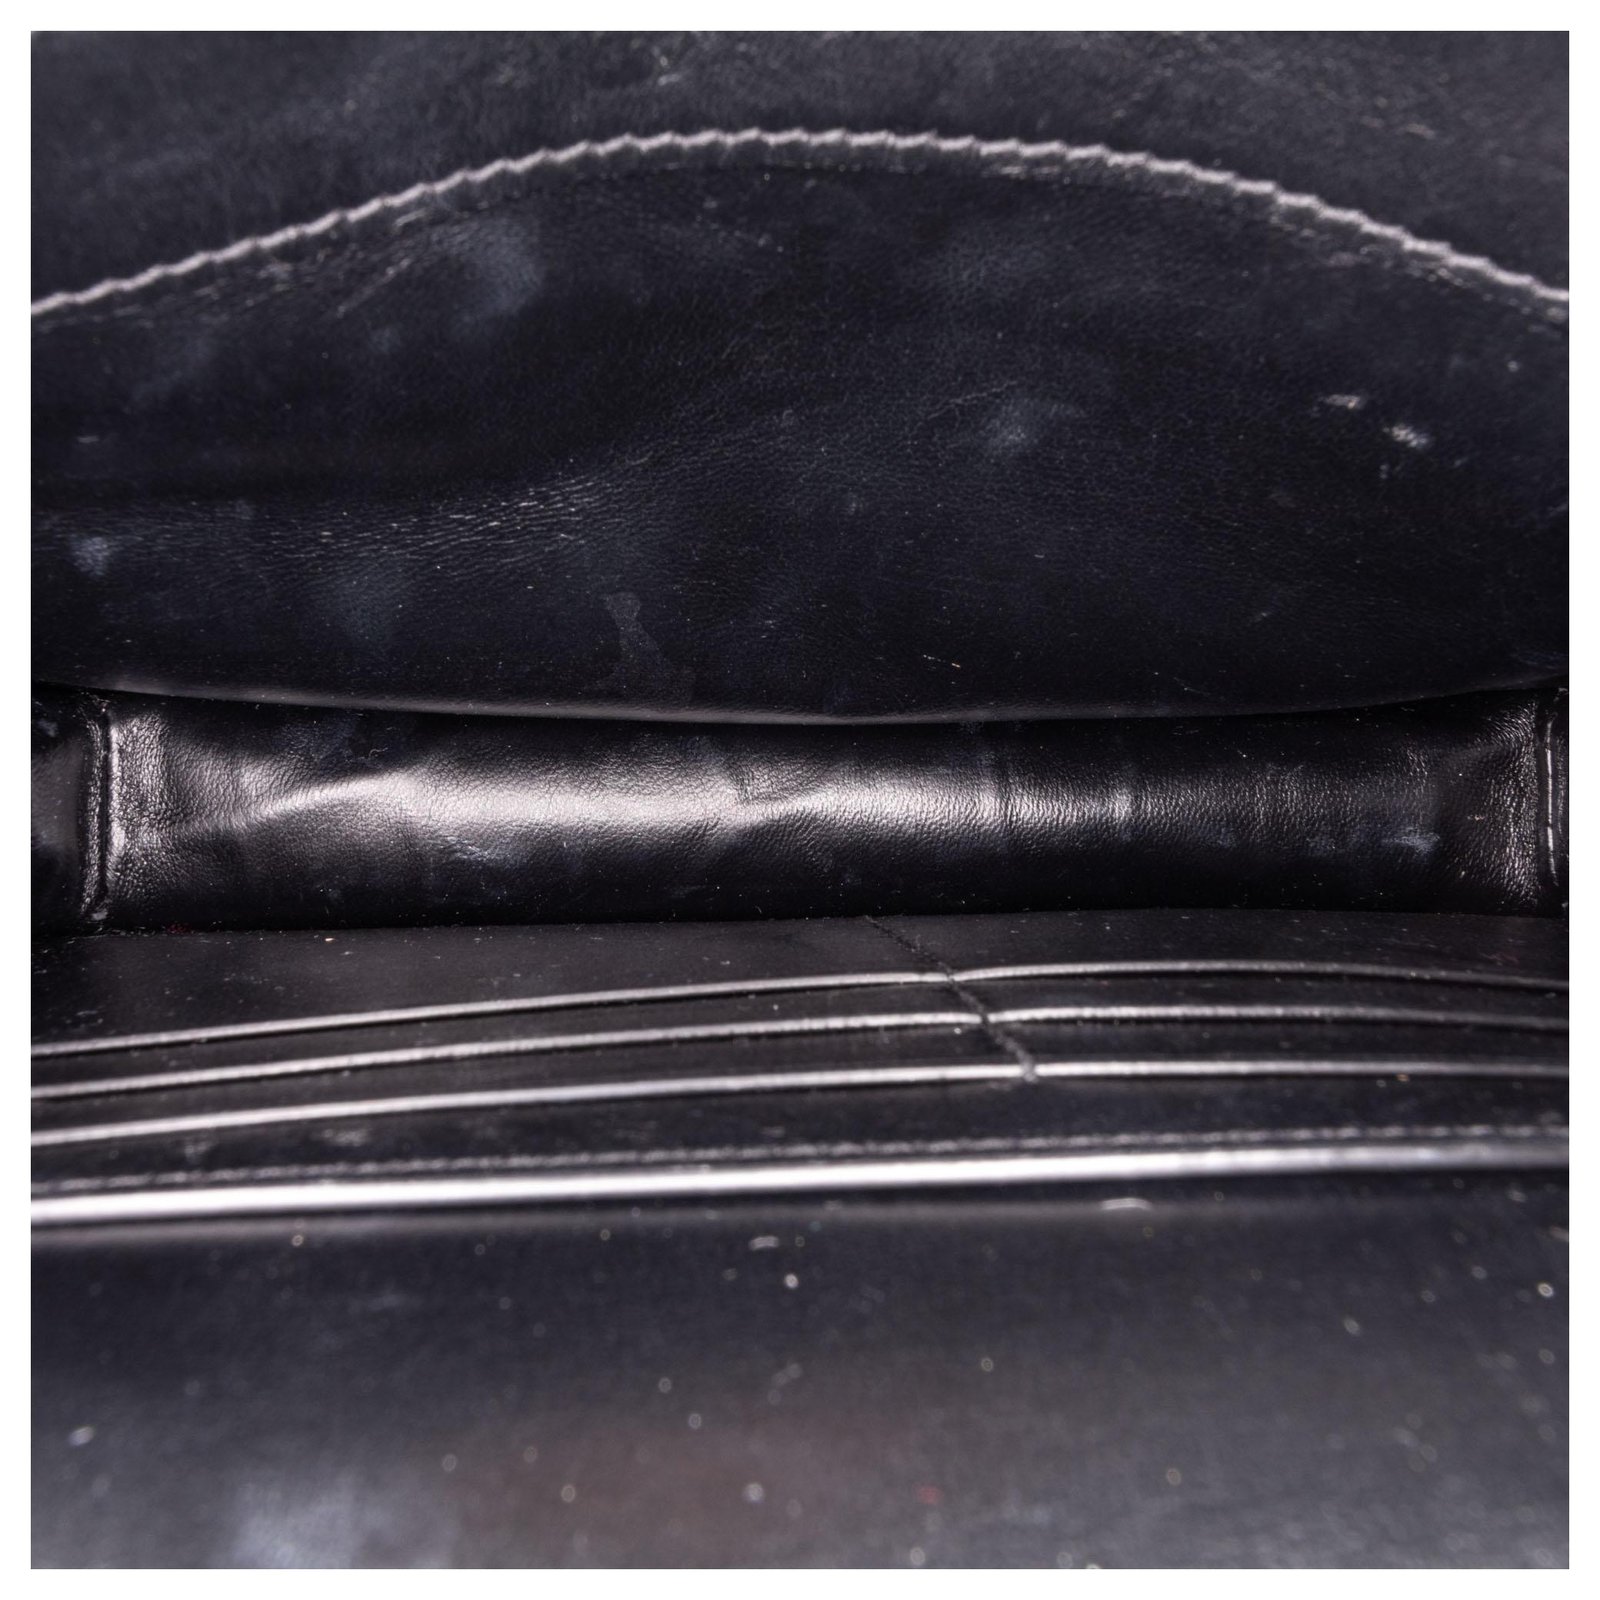 Classic metalic patent leather handbag Balenciaga Black in Patent